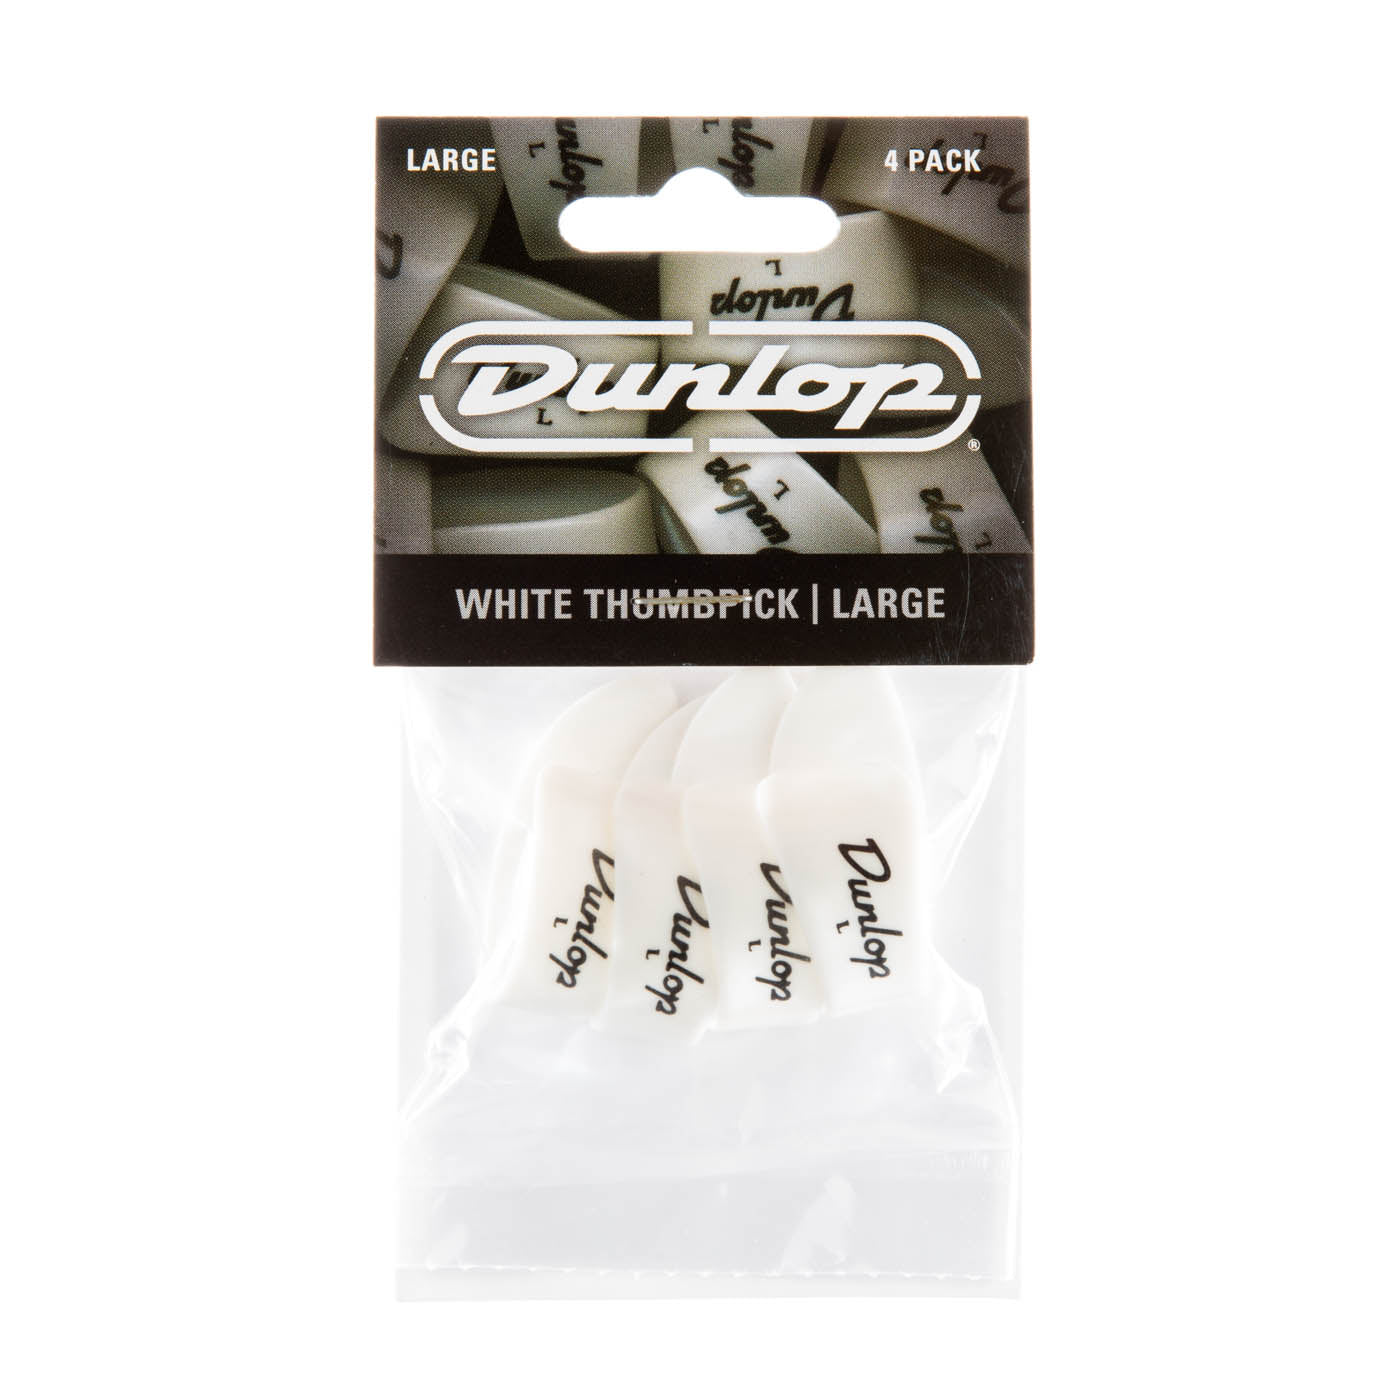 Dunlop 9003P White Thumbpicks Large 4 Players Pack